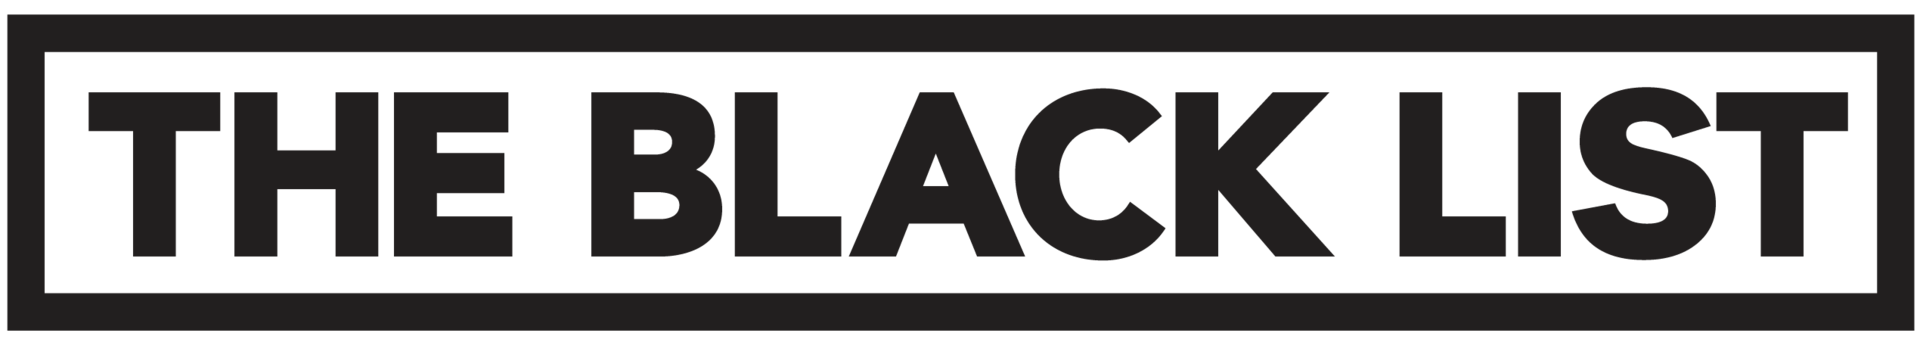 1920px-Black_List_logo.png